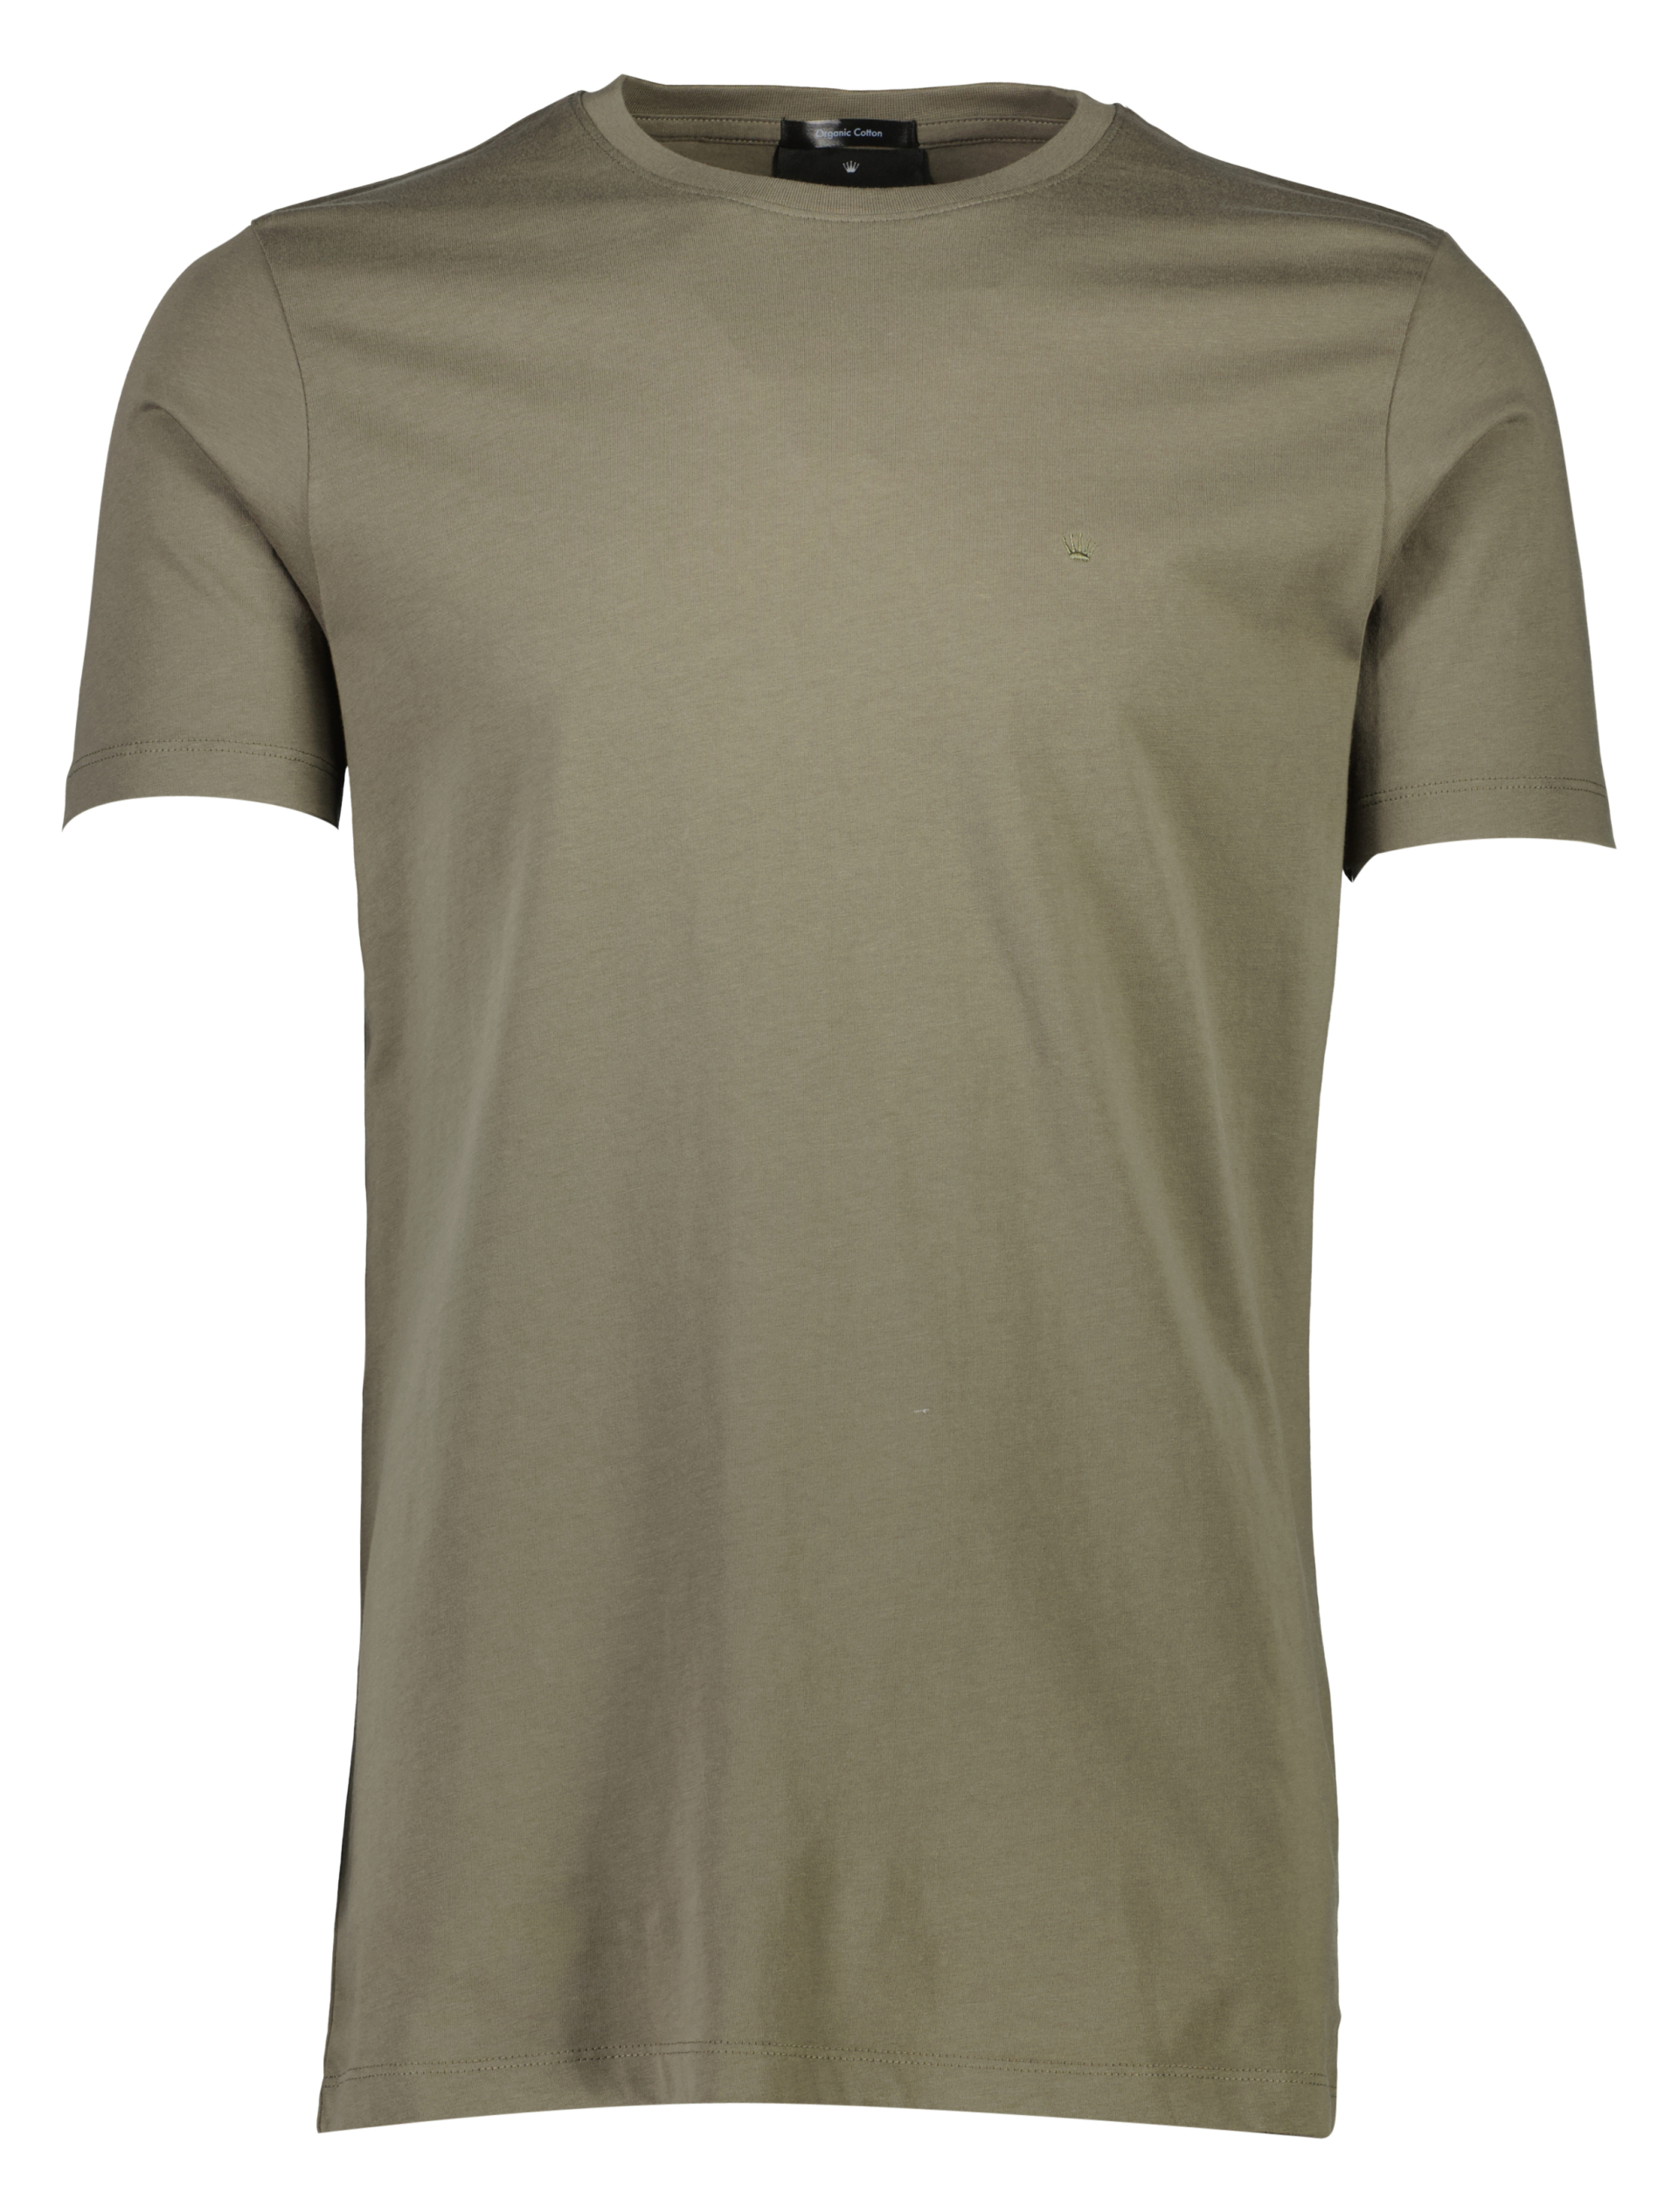 Junk de Luxe T-shirt grön / lt dusty army